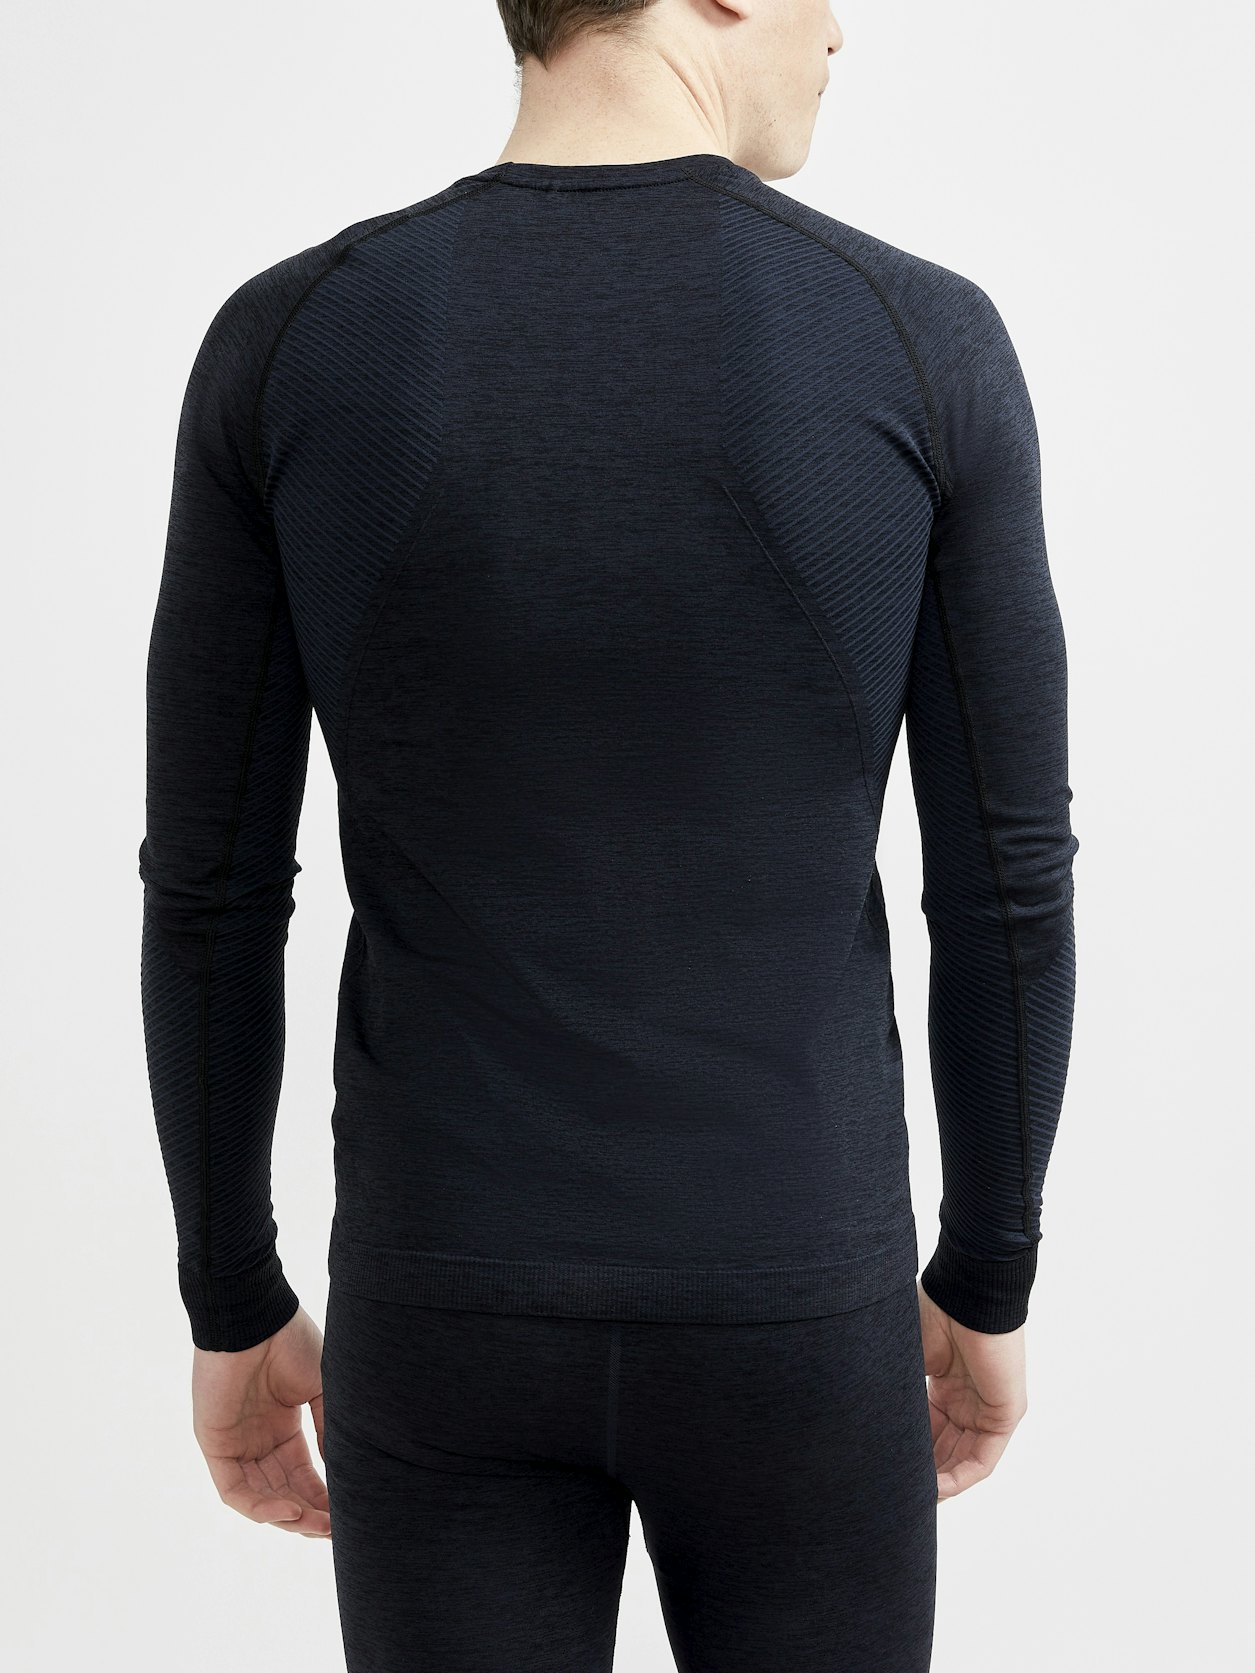 CORE Dry Active Comfort LS M - Black | Craft Sportswear